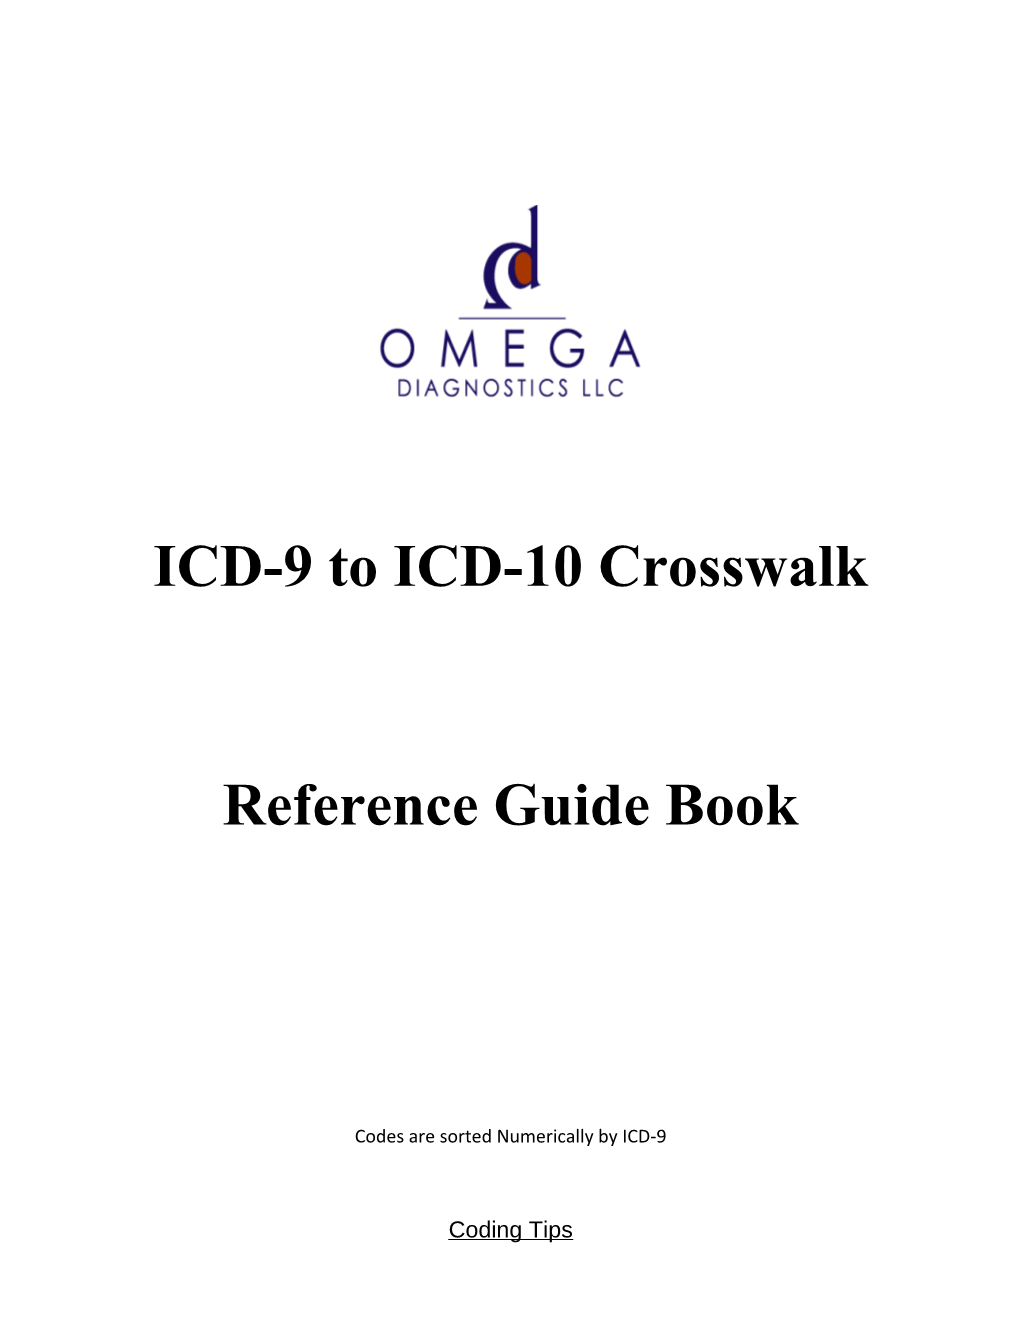 ICD-9 to ICD-10 Crosswalk